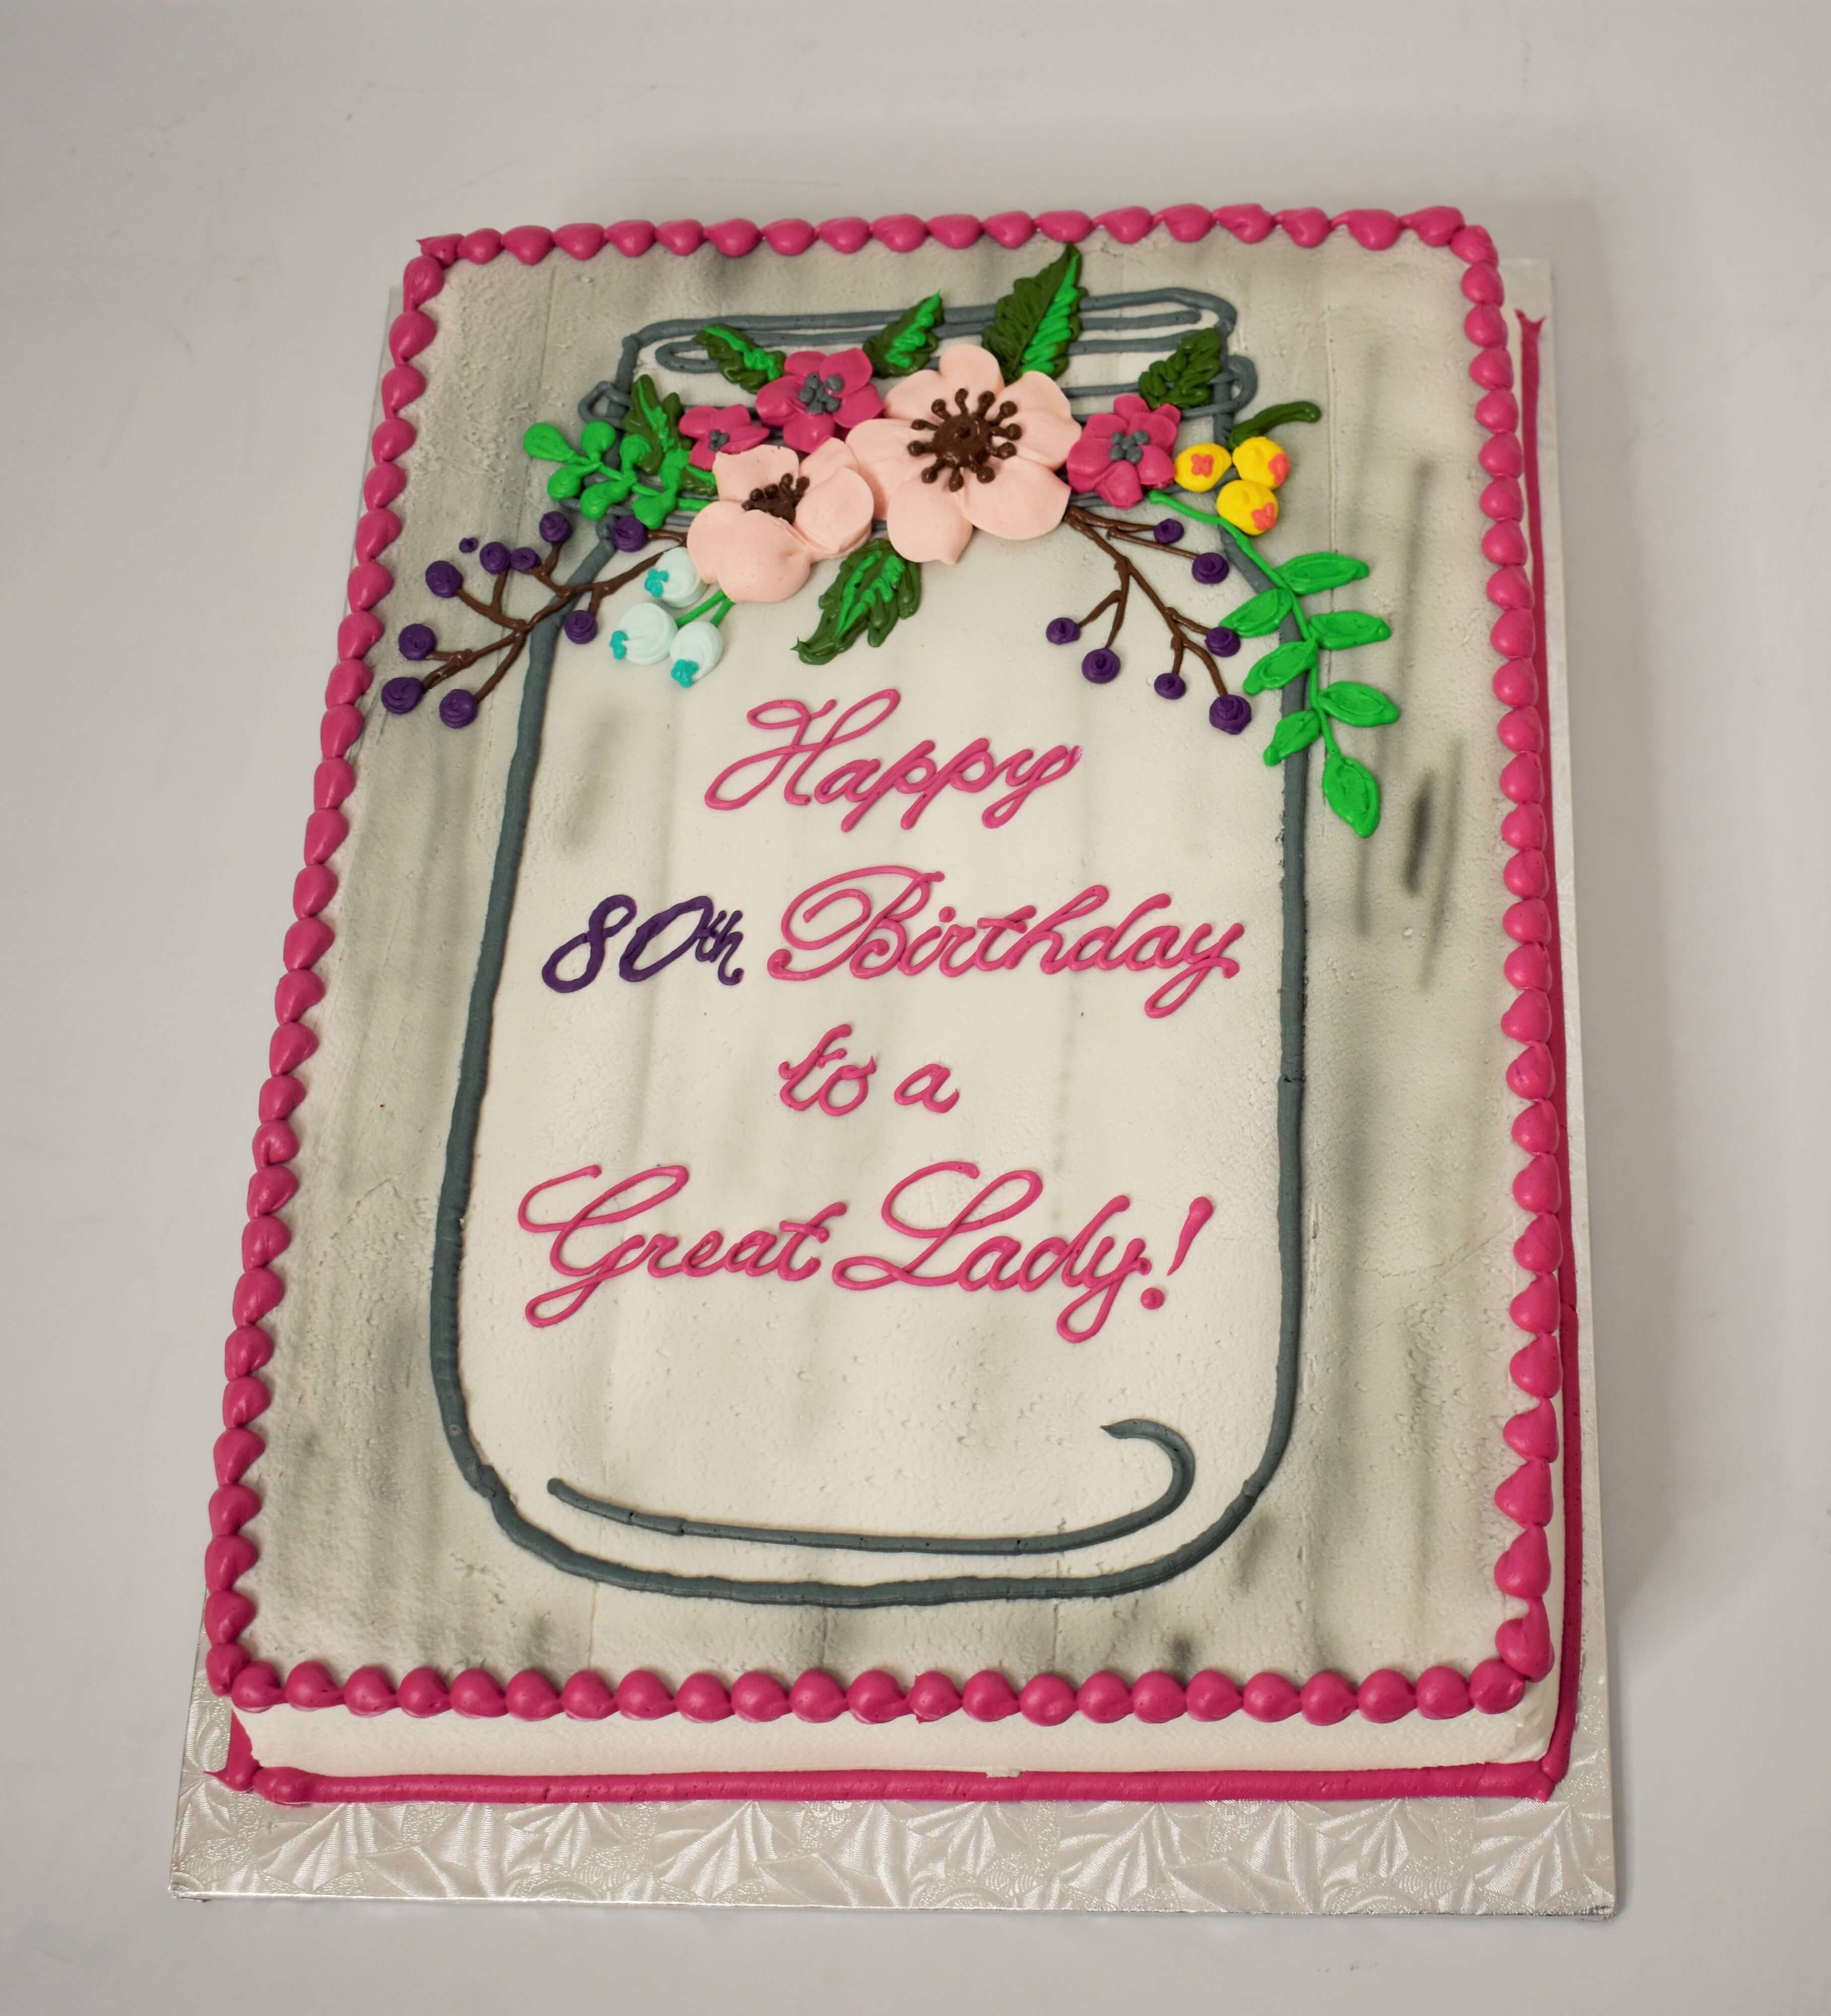 McArthur's Bakery Custom Cake with Mason Jar, Flowers, Twigs, Berries